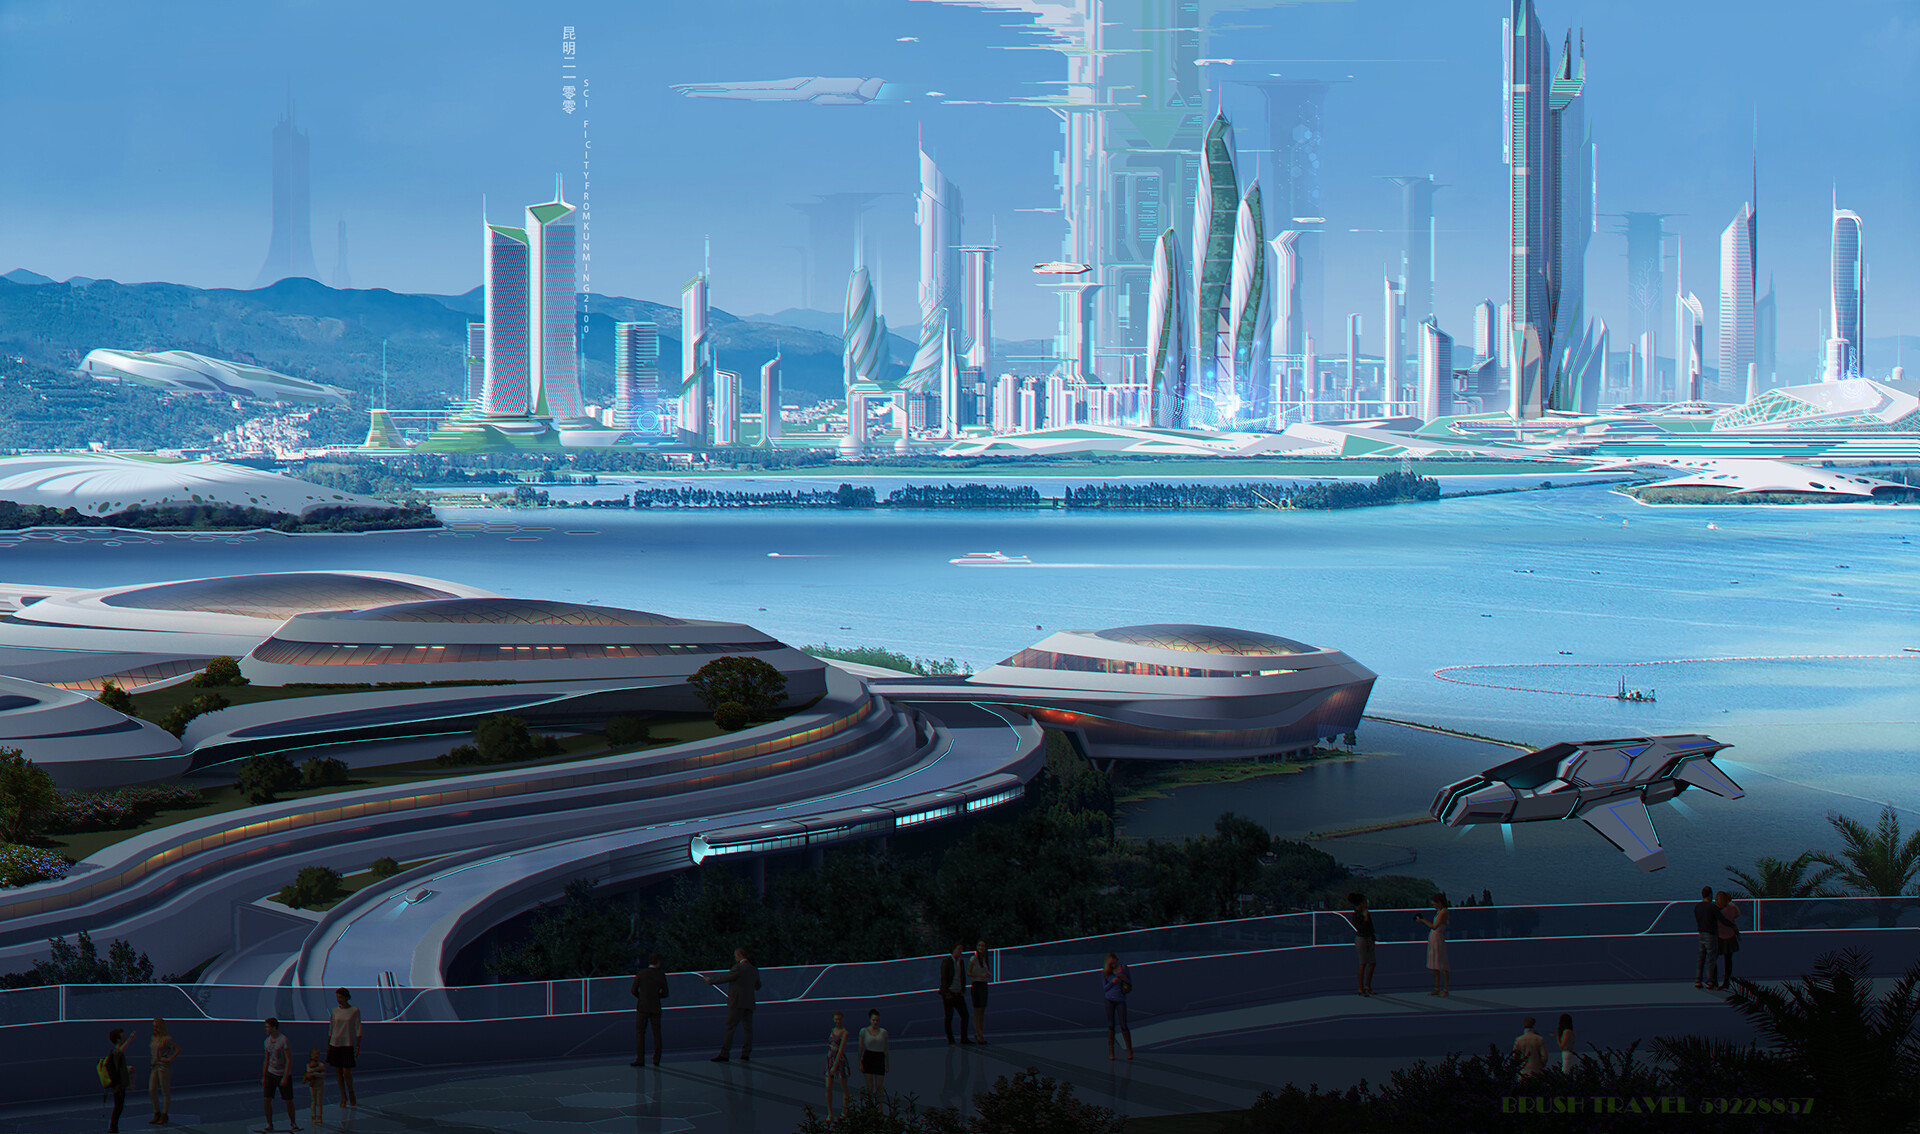 Future town. Футуристическая архитектура будущего концепт арт. Футуристический город будущего. Город будущего 2050.